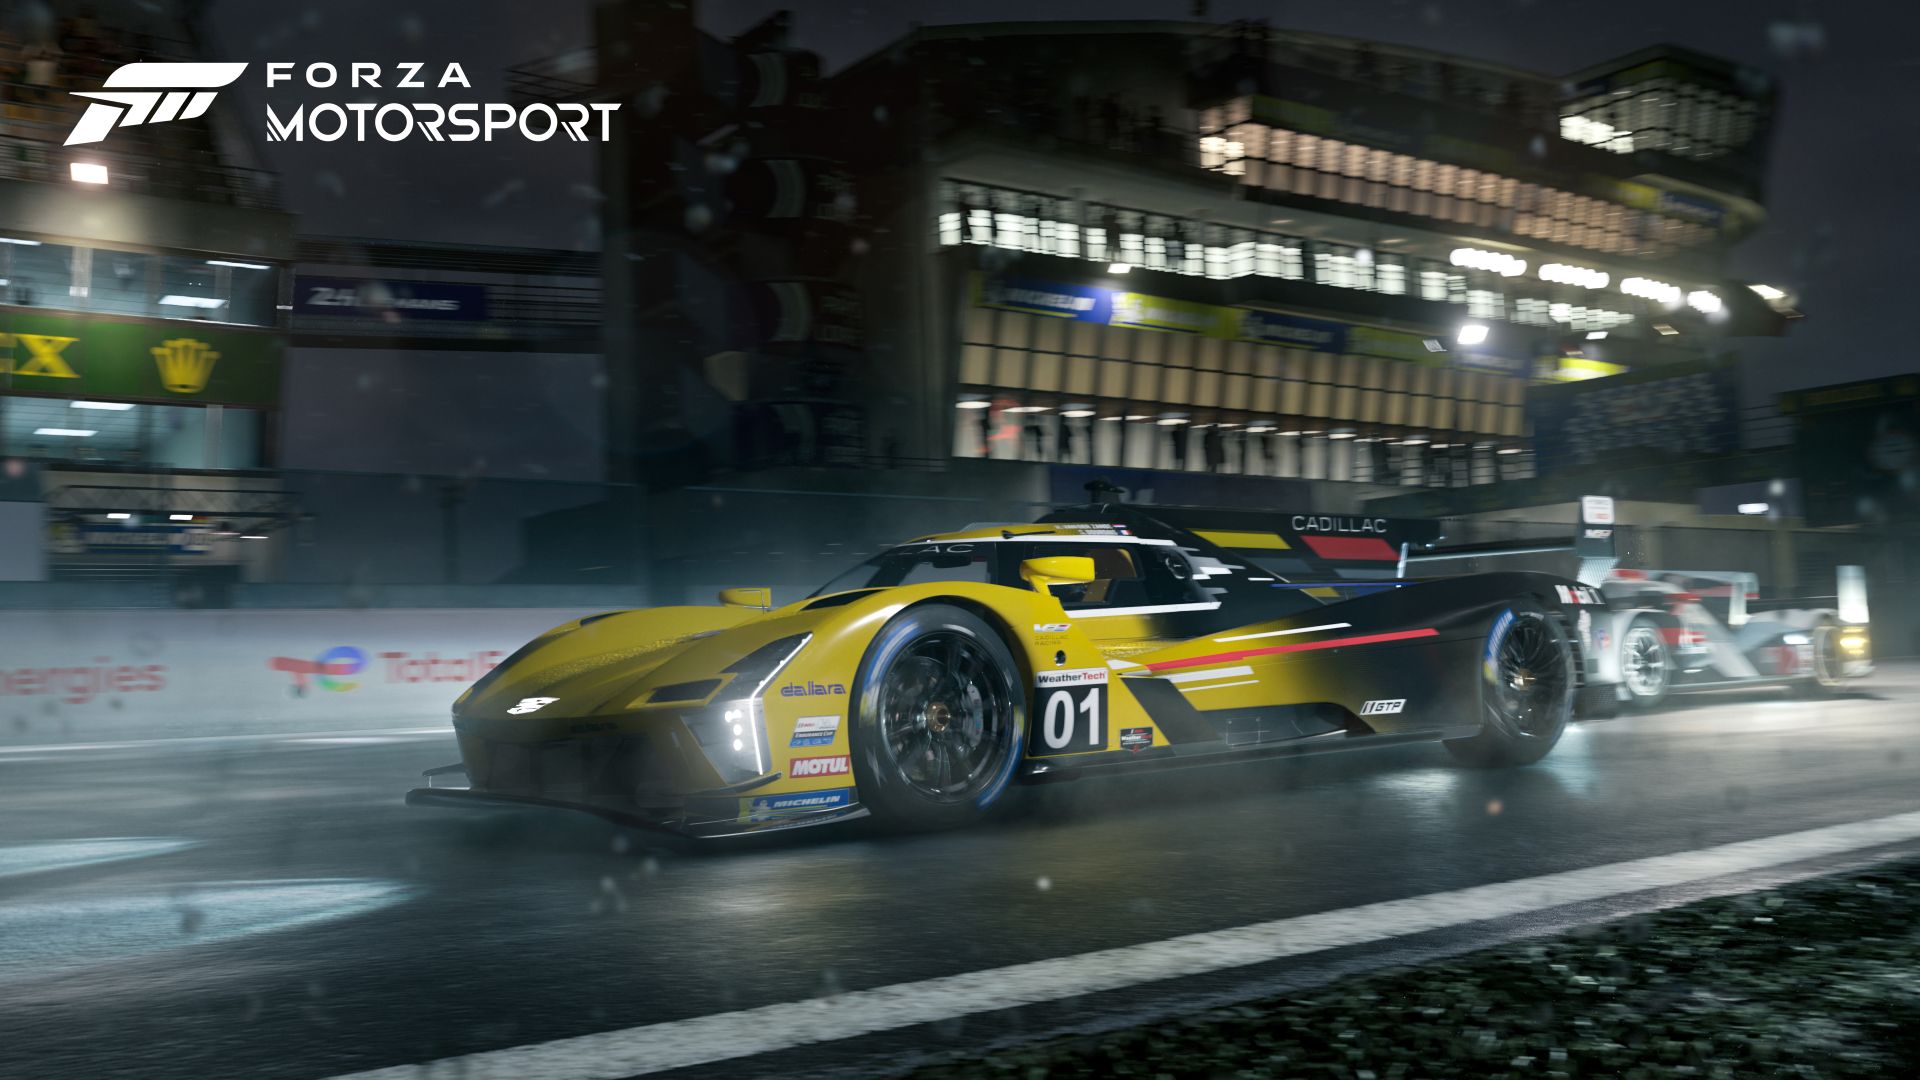 Forza Motorsport at gamescom: Introducing Nürburgring GP, Steam